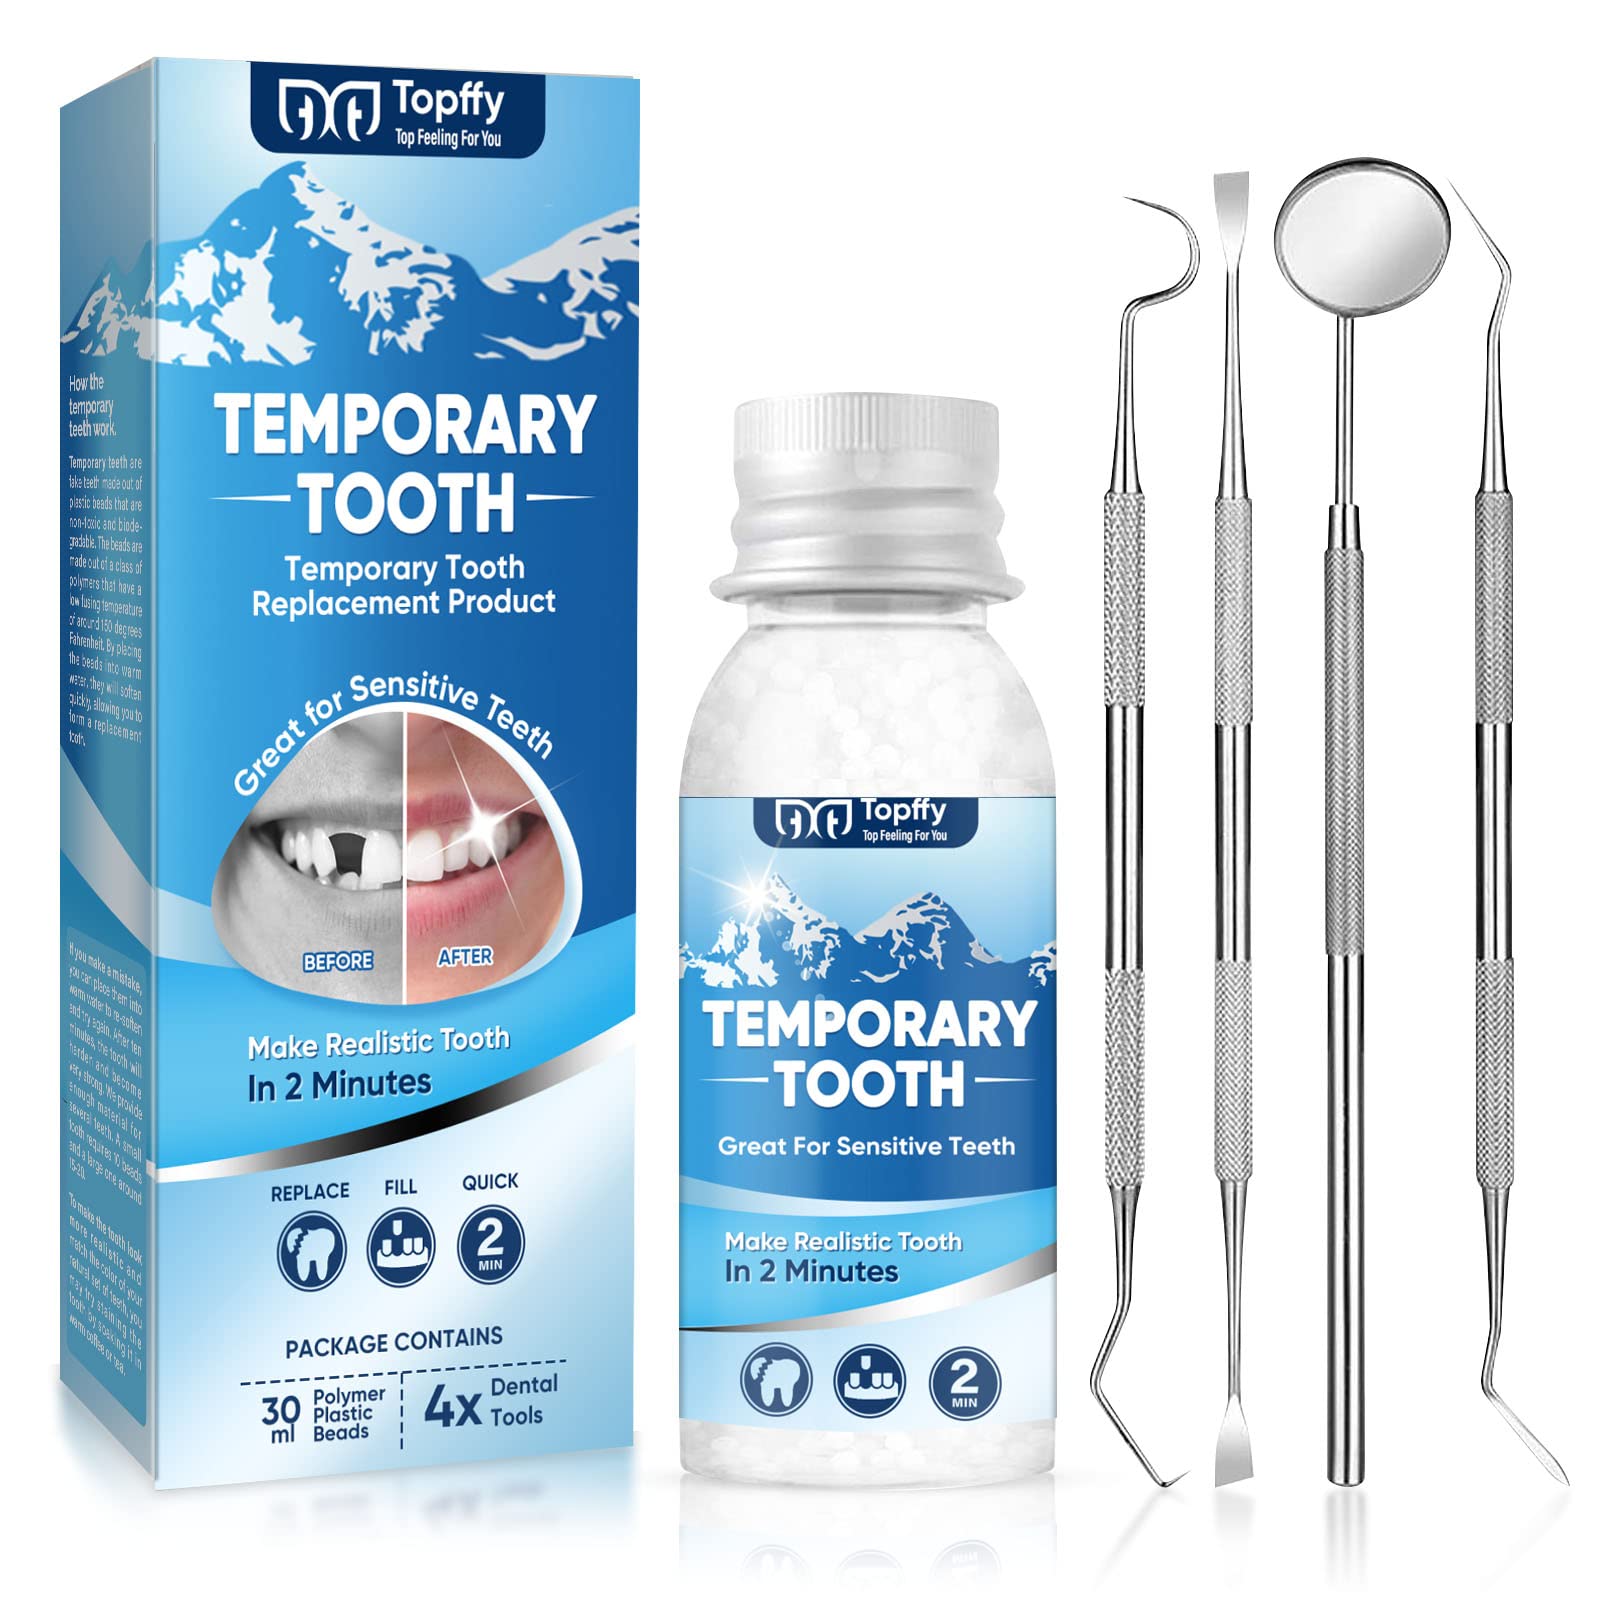 Moldable False Teeth Glue Temporary Filling Teeth, Fix Missing And Broken  Teeth 